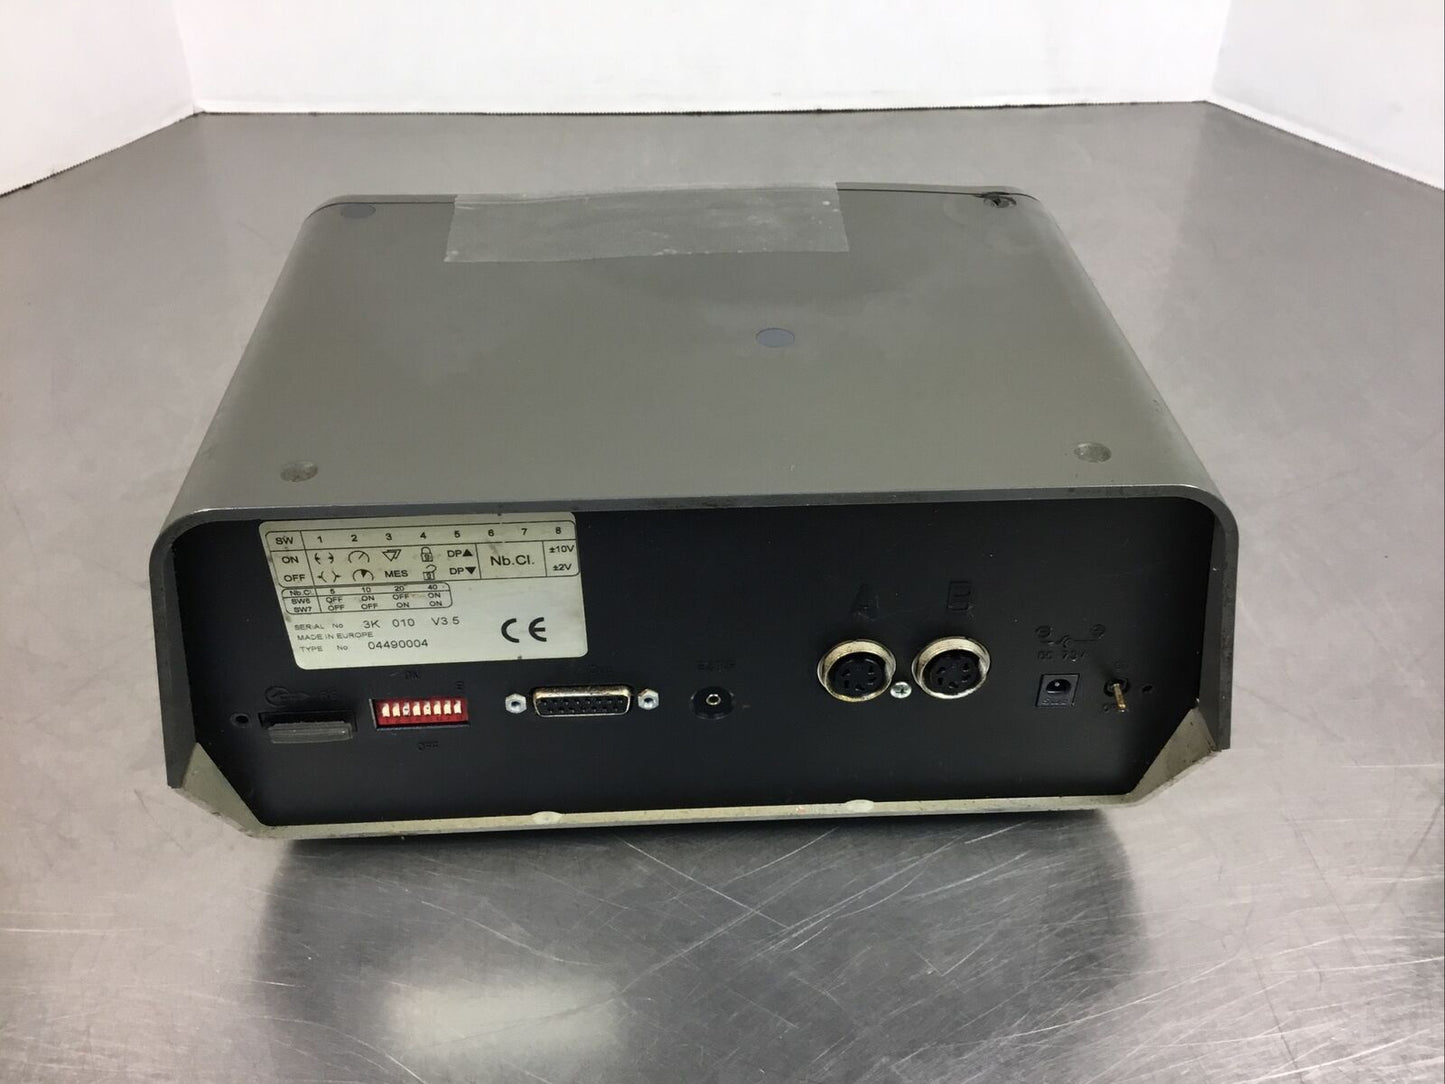 Brown & Sharpe TT60 Gage Amplifier 2 Probe input Type No.  04490004   2D